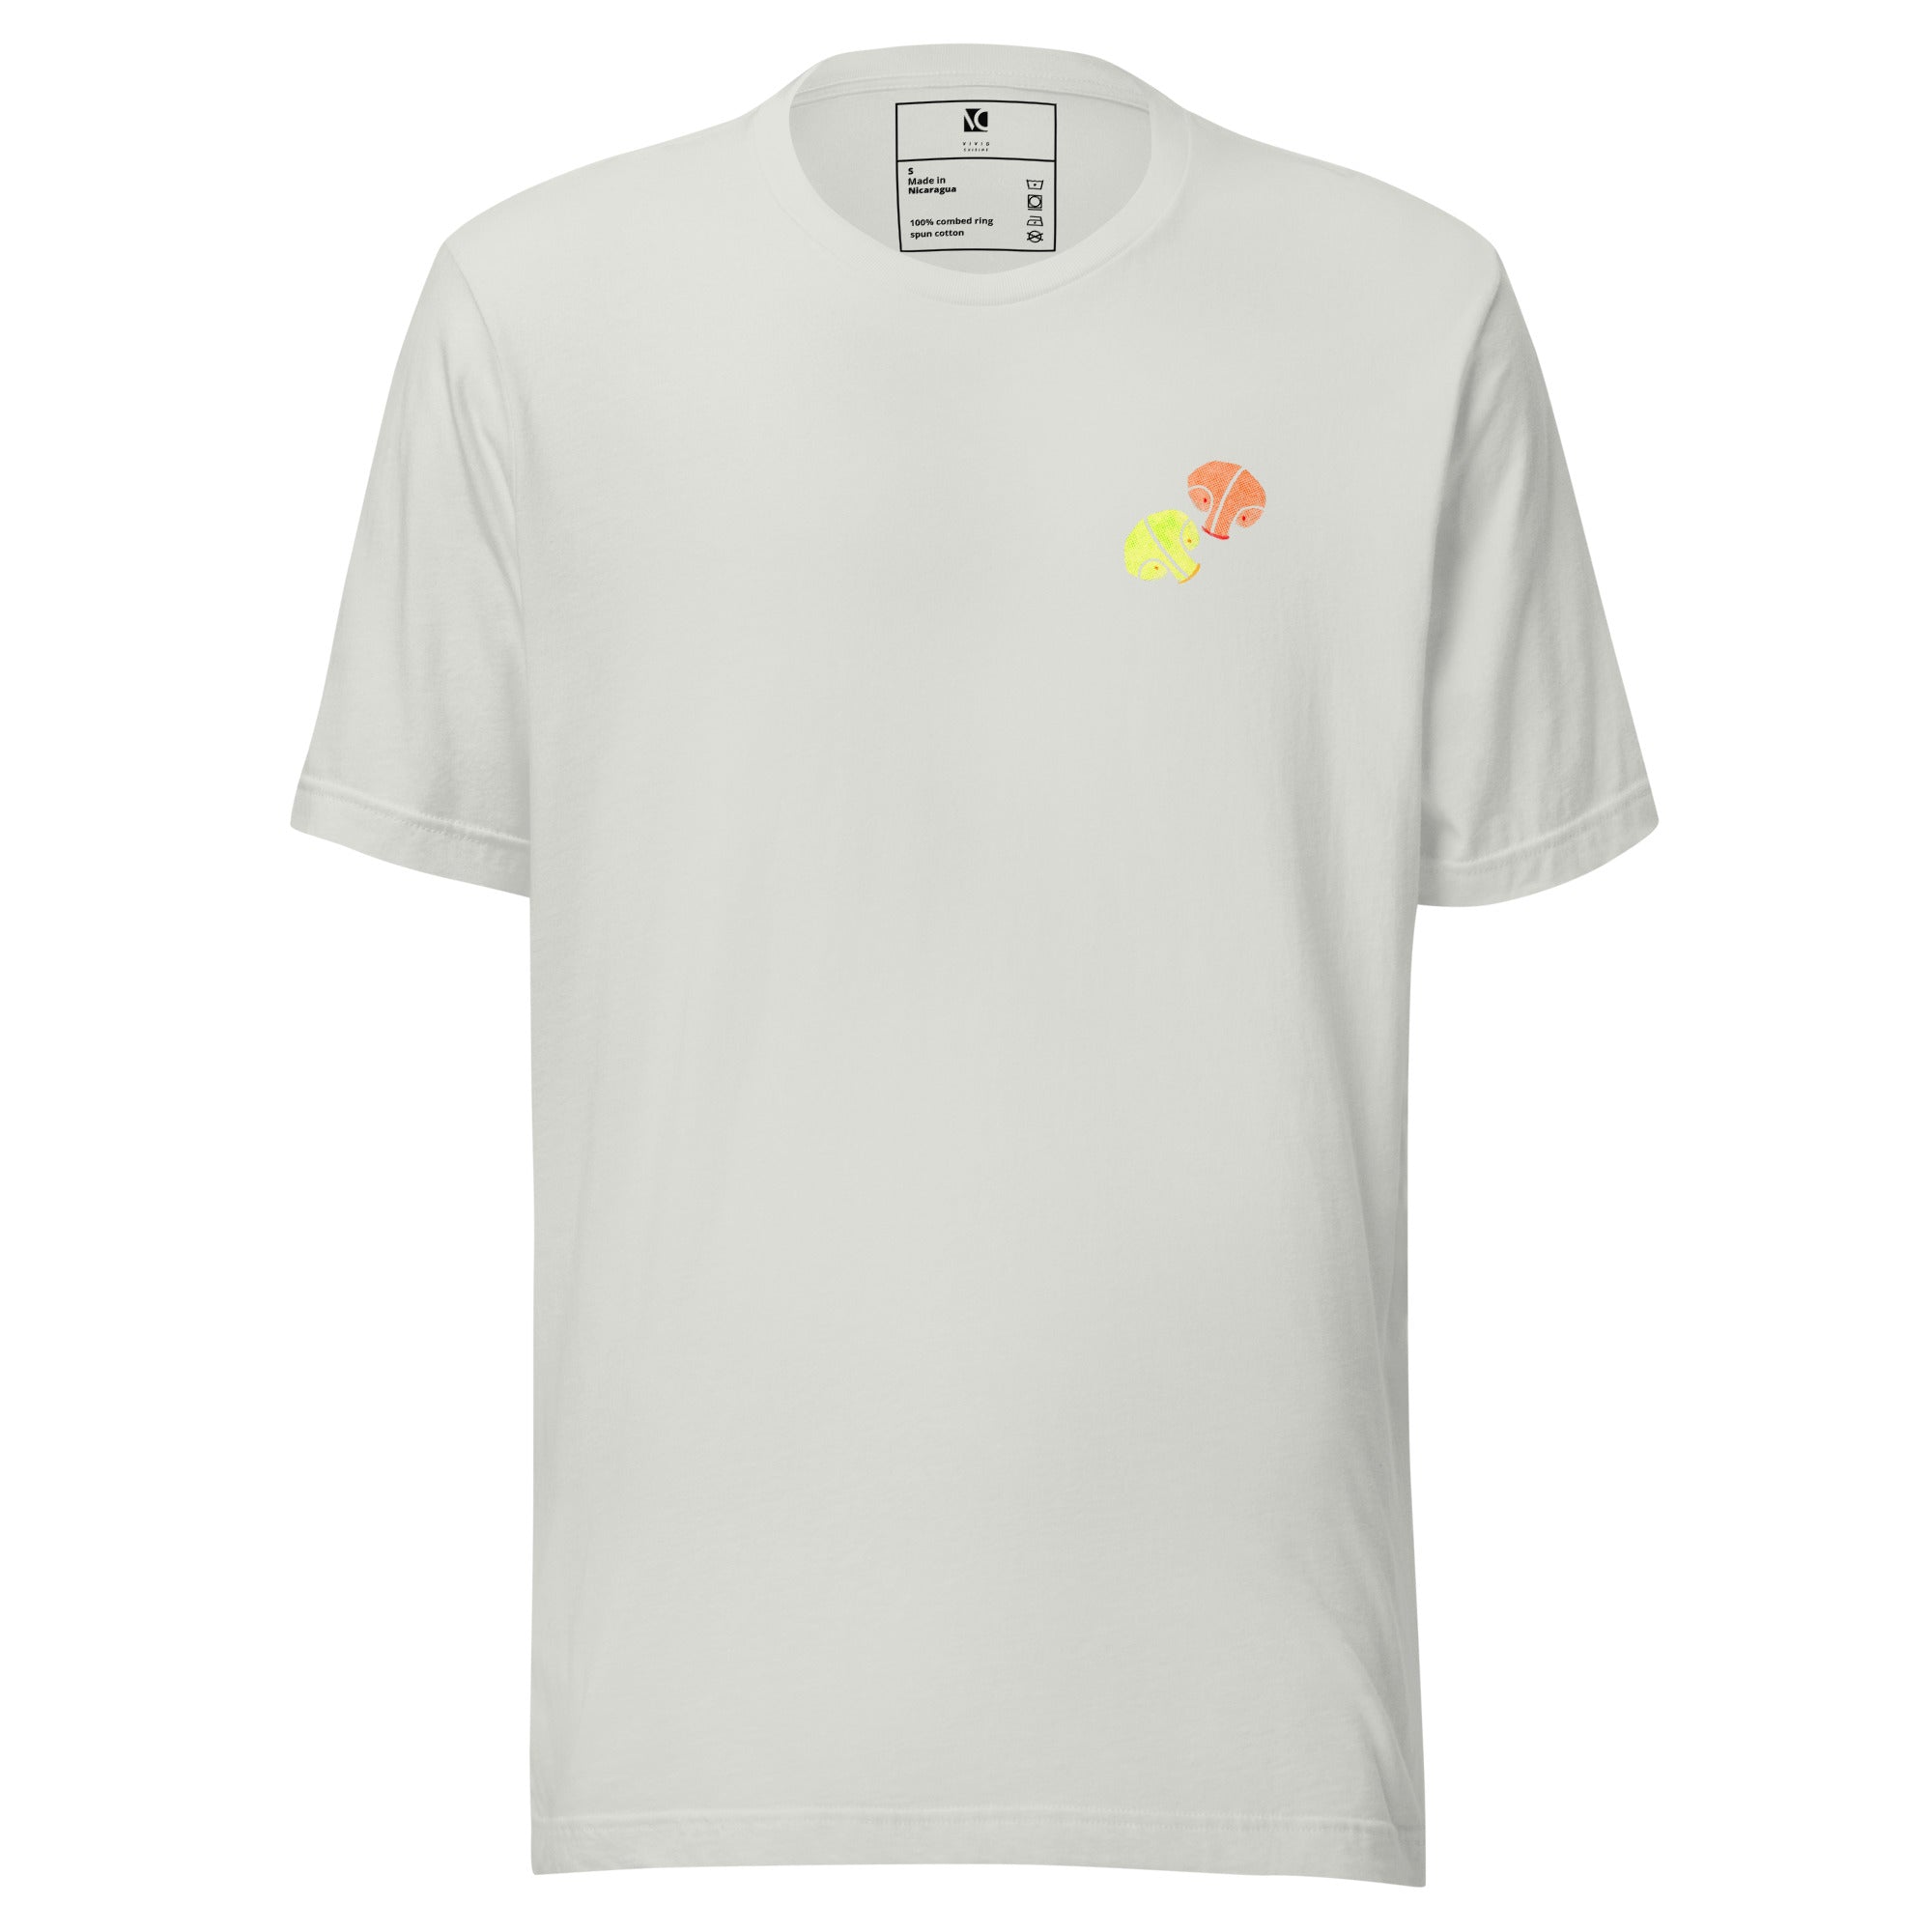 Mini Champiñiones - Unisex T-Shirt